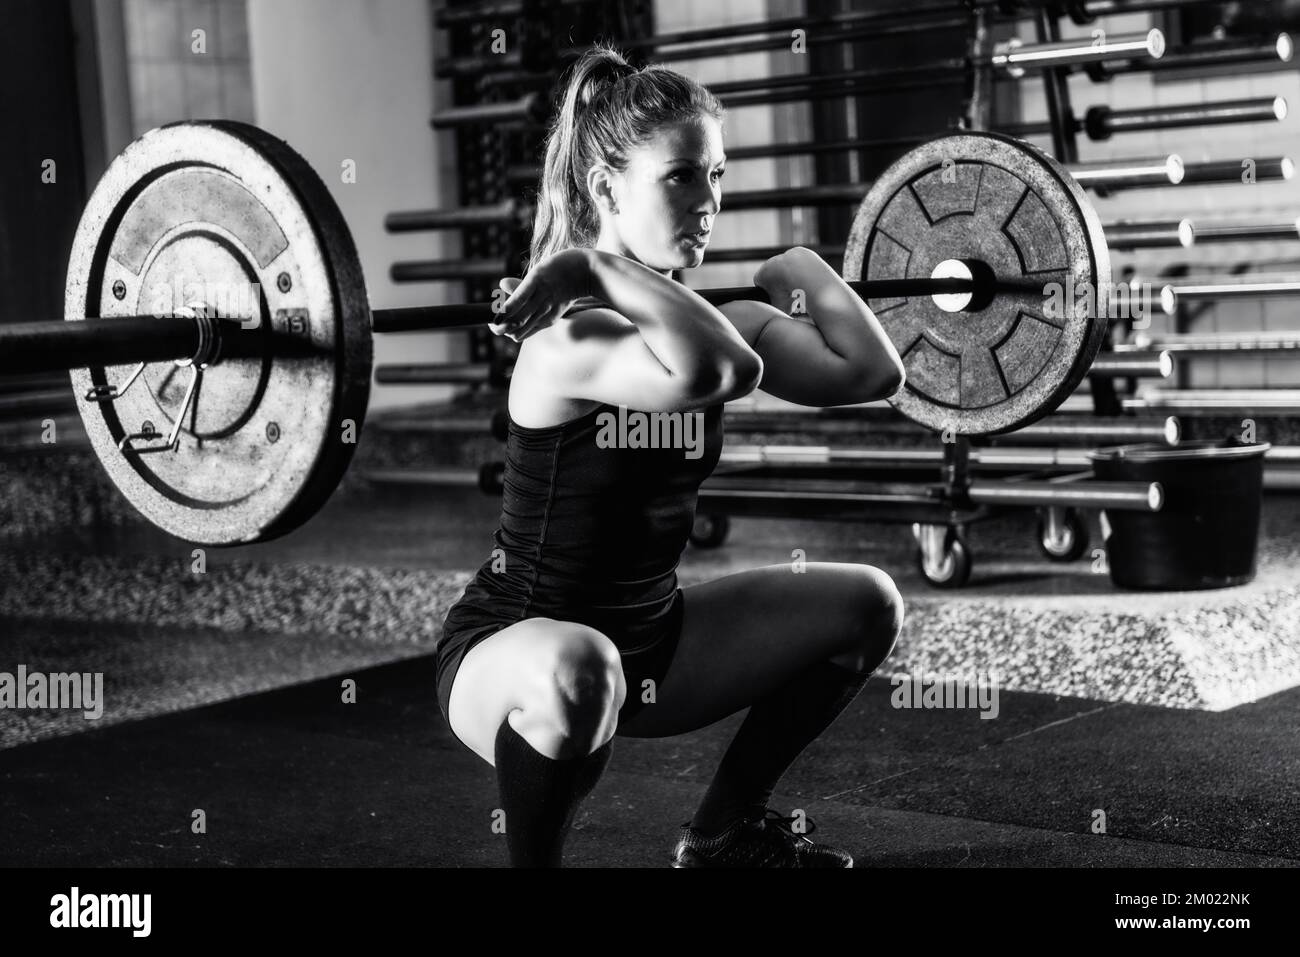 Female athlete lifting heavy barbells. Stock Photo